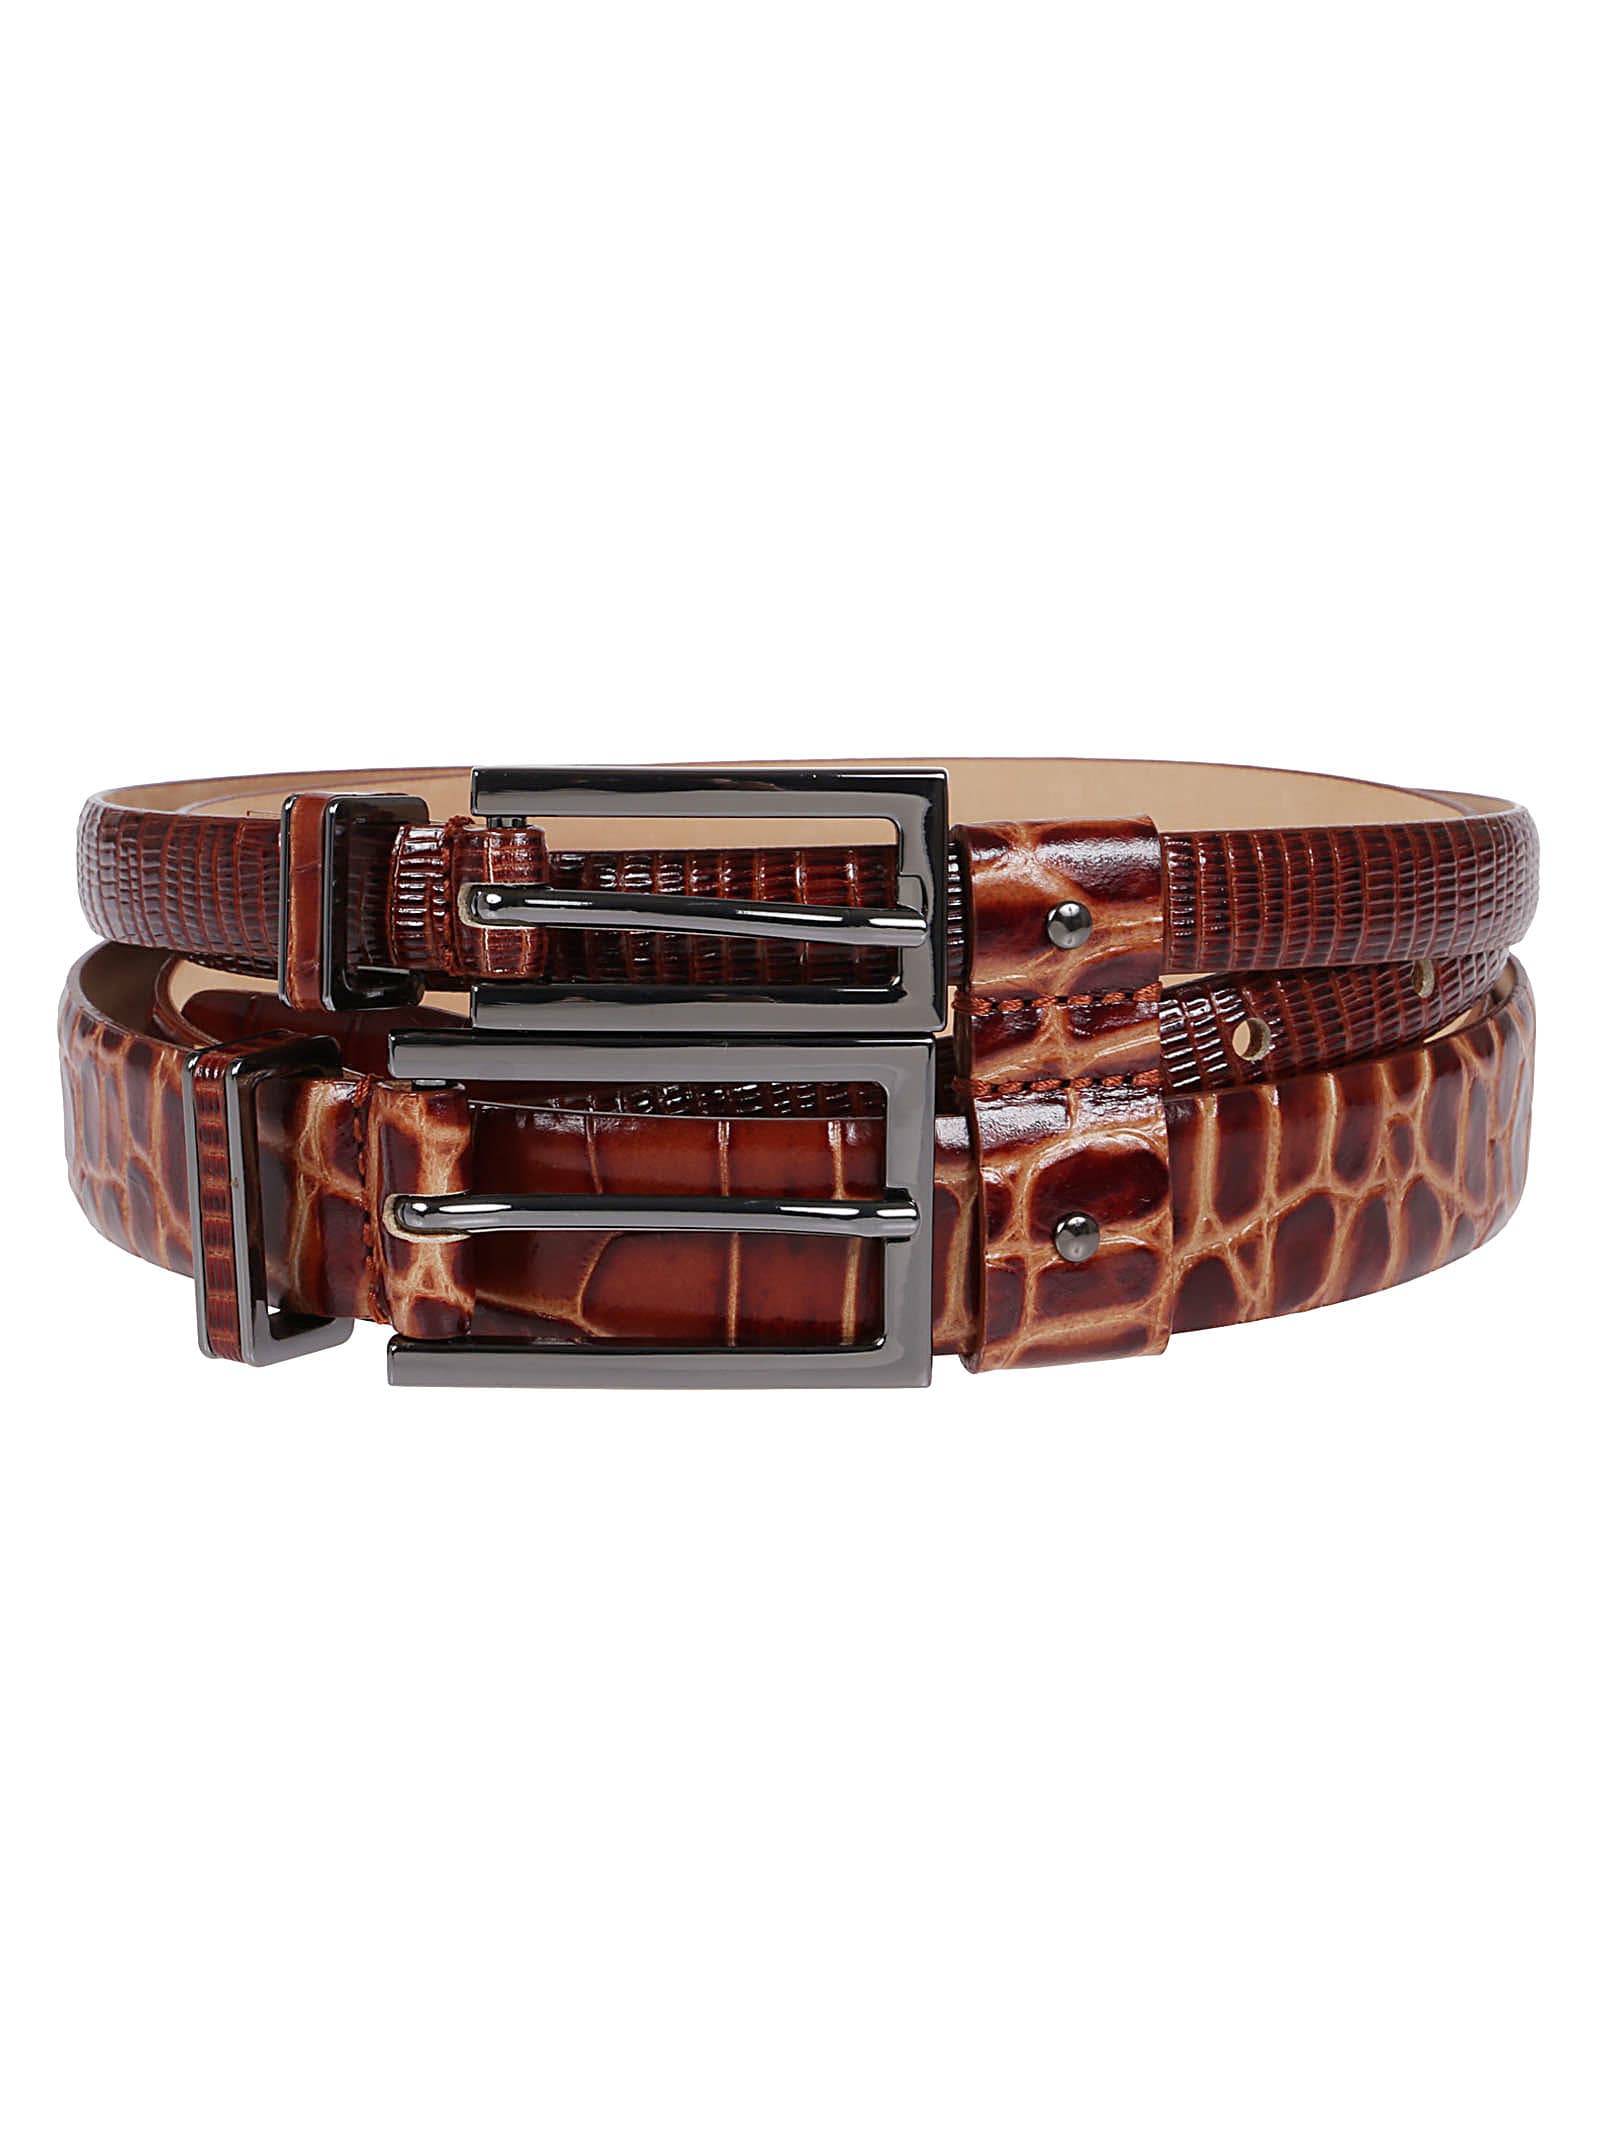 Max Mara Brown Leather Belt